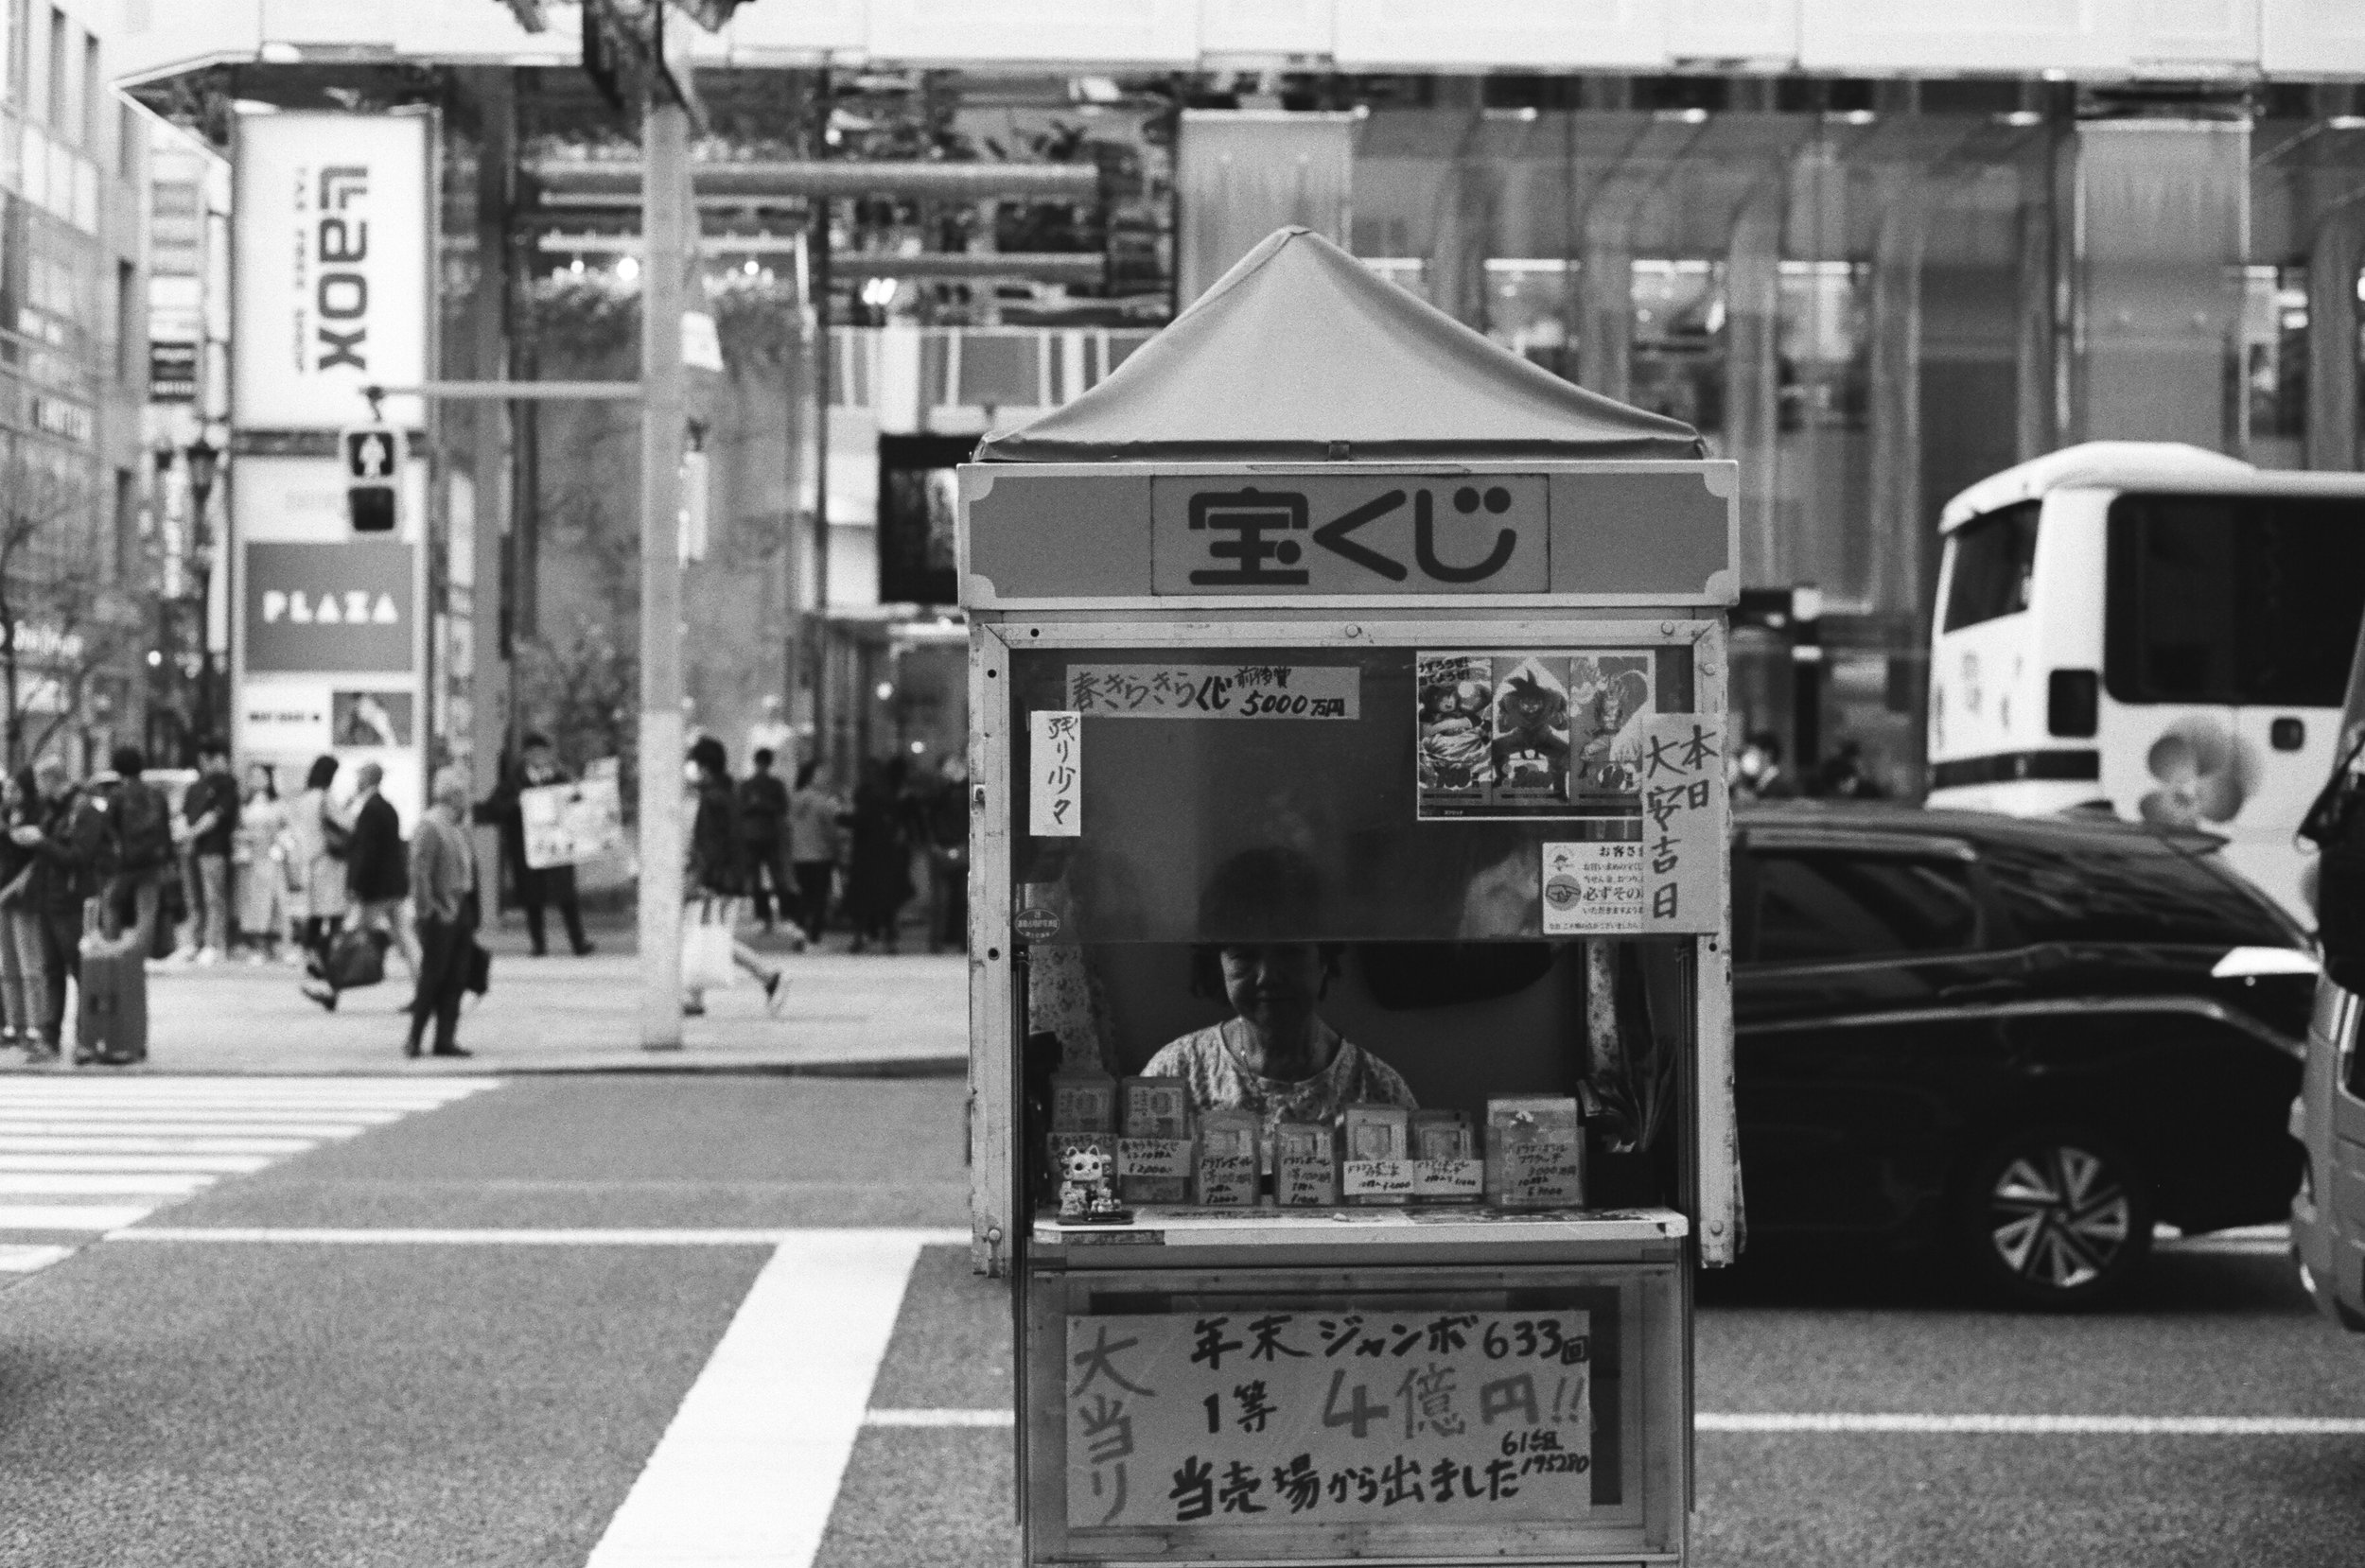 Lotto. Tokyo, 2017 / Leica M6 35mm